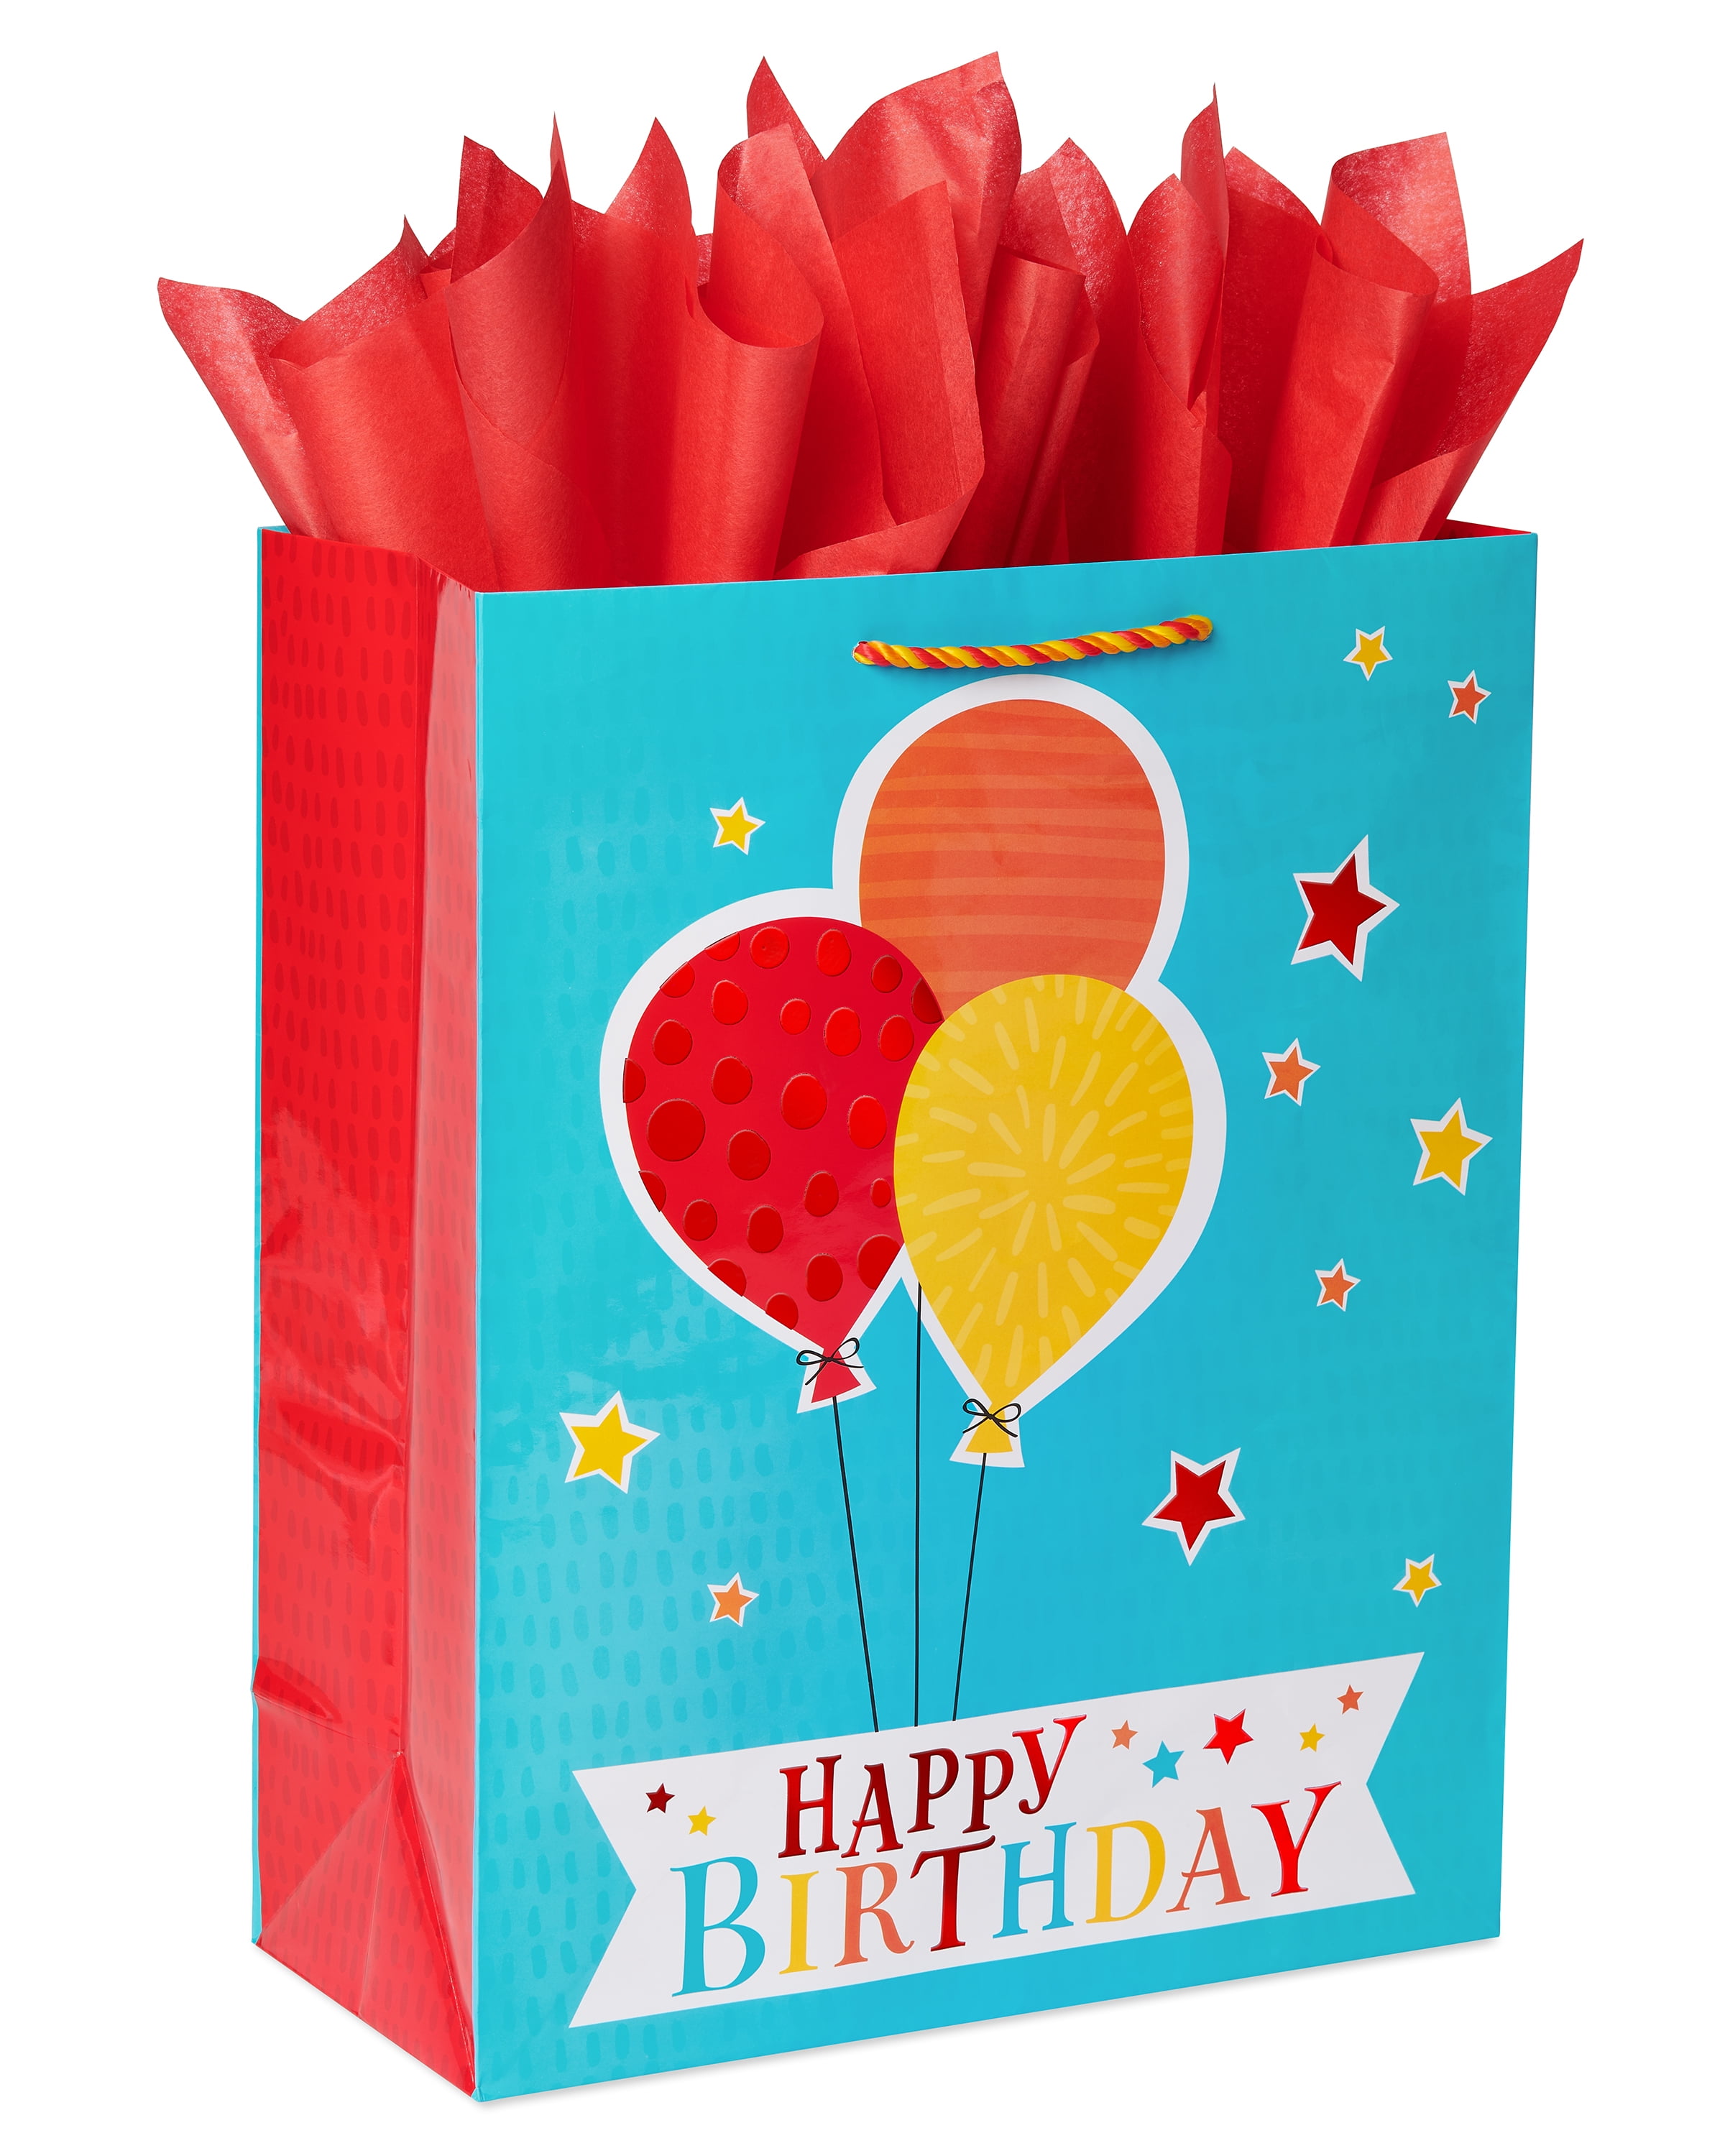  Loveinside Birthday Gift Bag with Tissue Paper, Gift